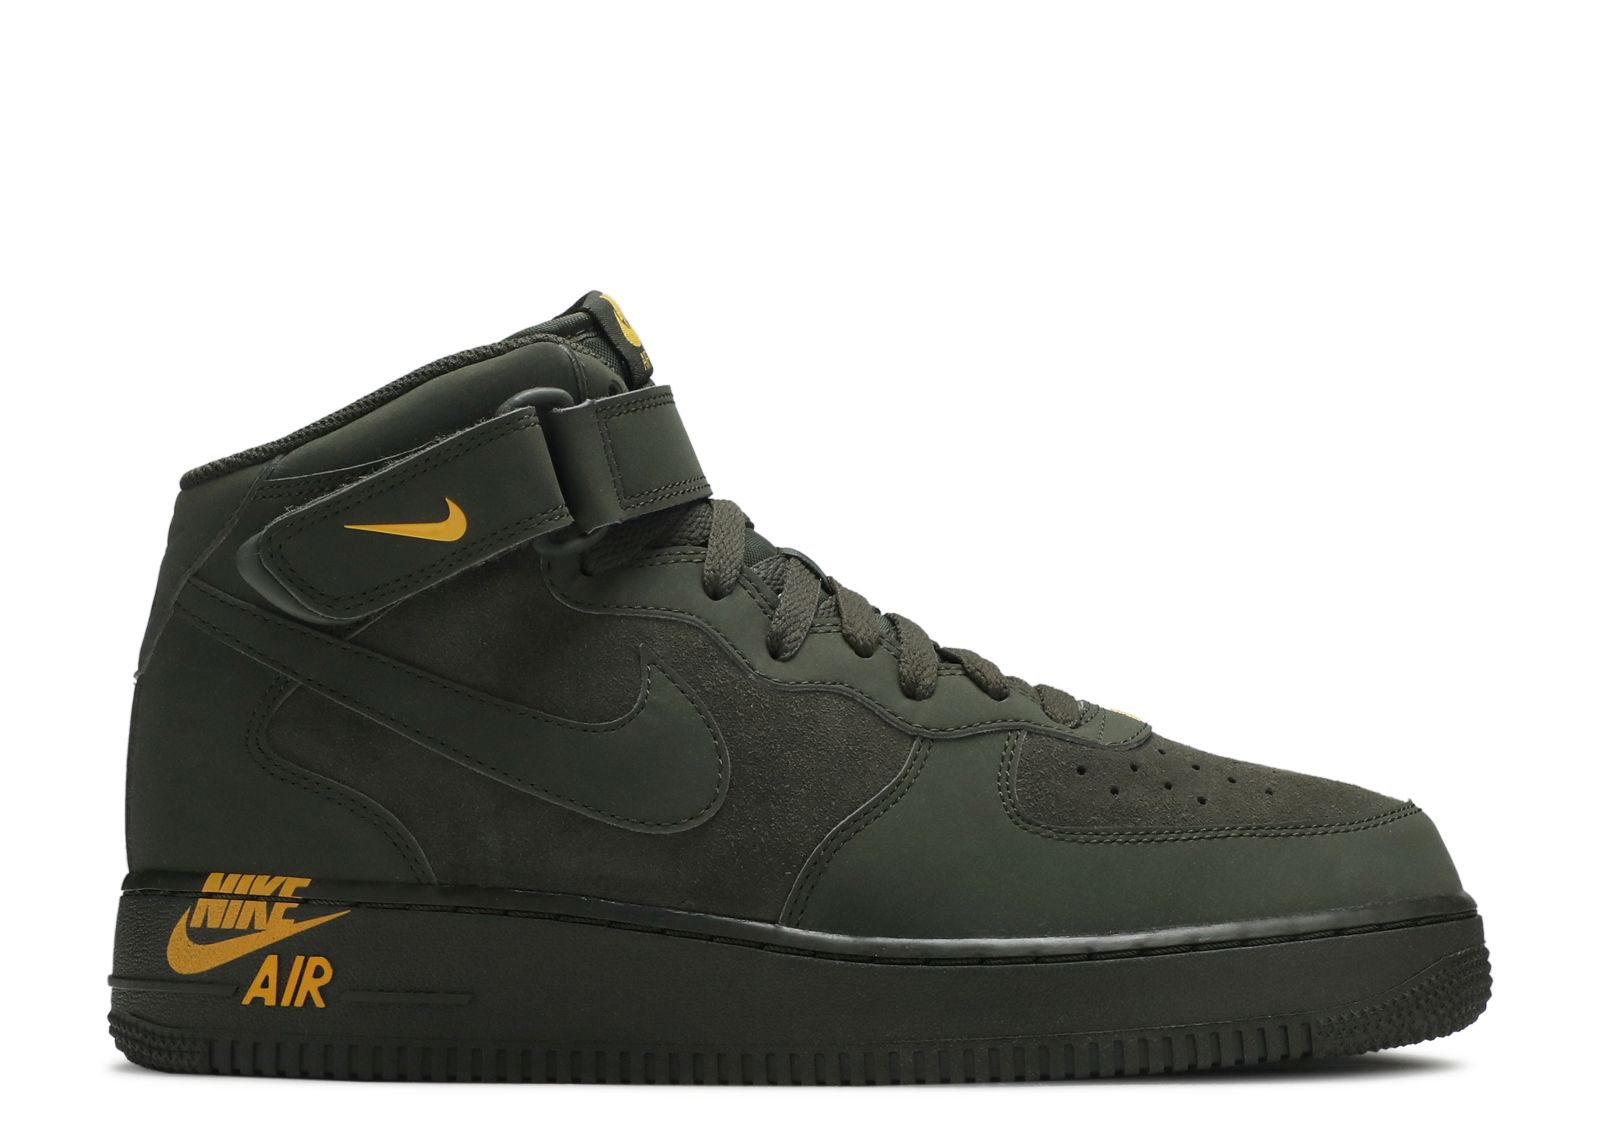 Air Force 1 Mid '07 'Emblem Pack' - Nike - 315123 304 - sequoia 